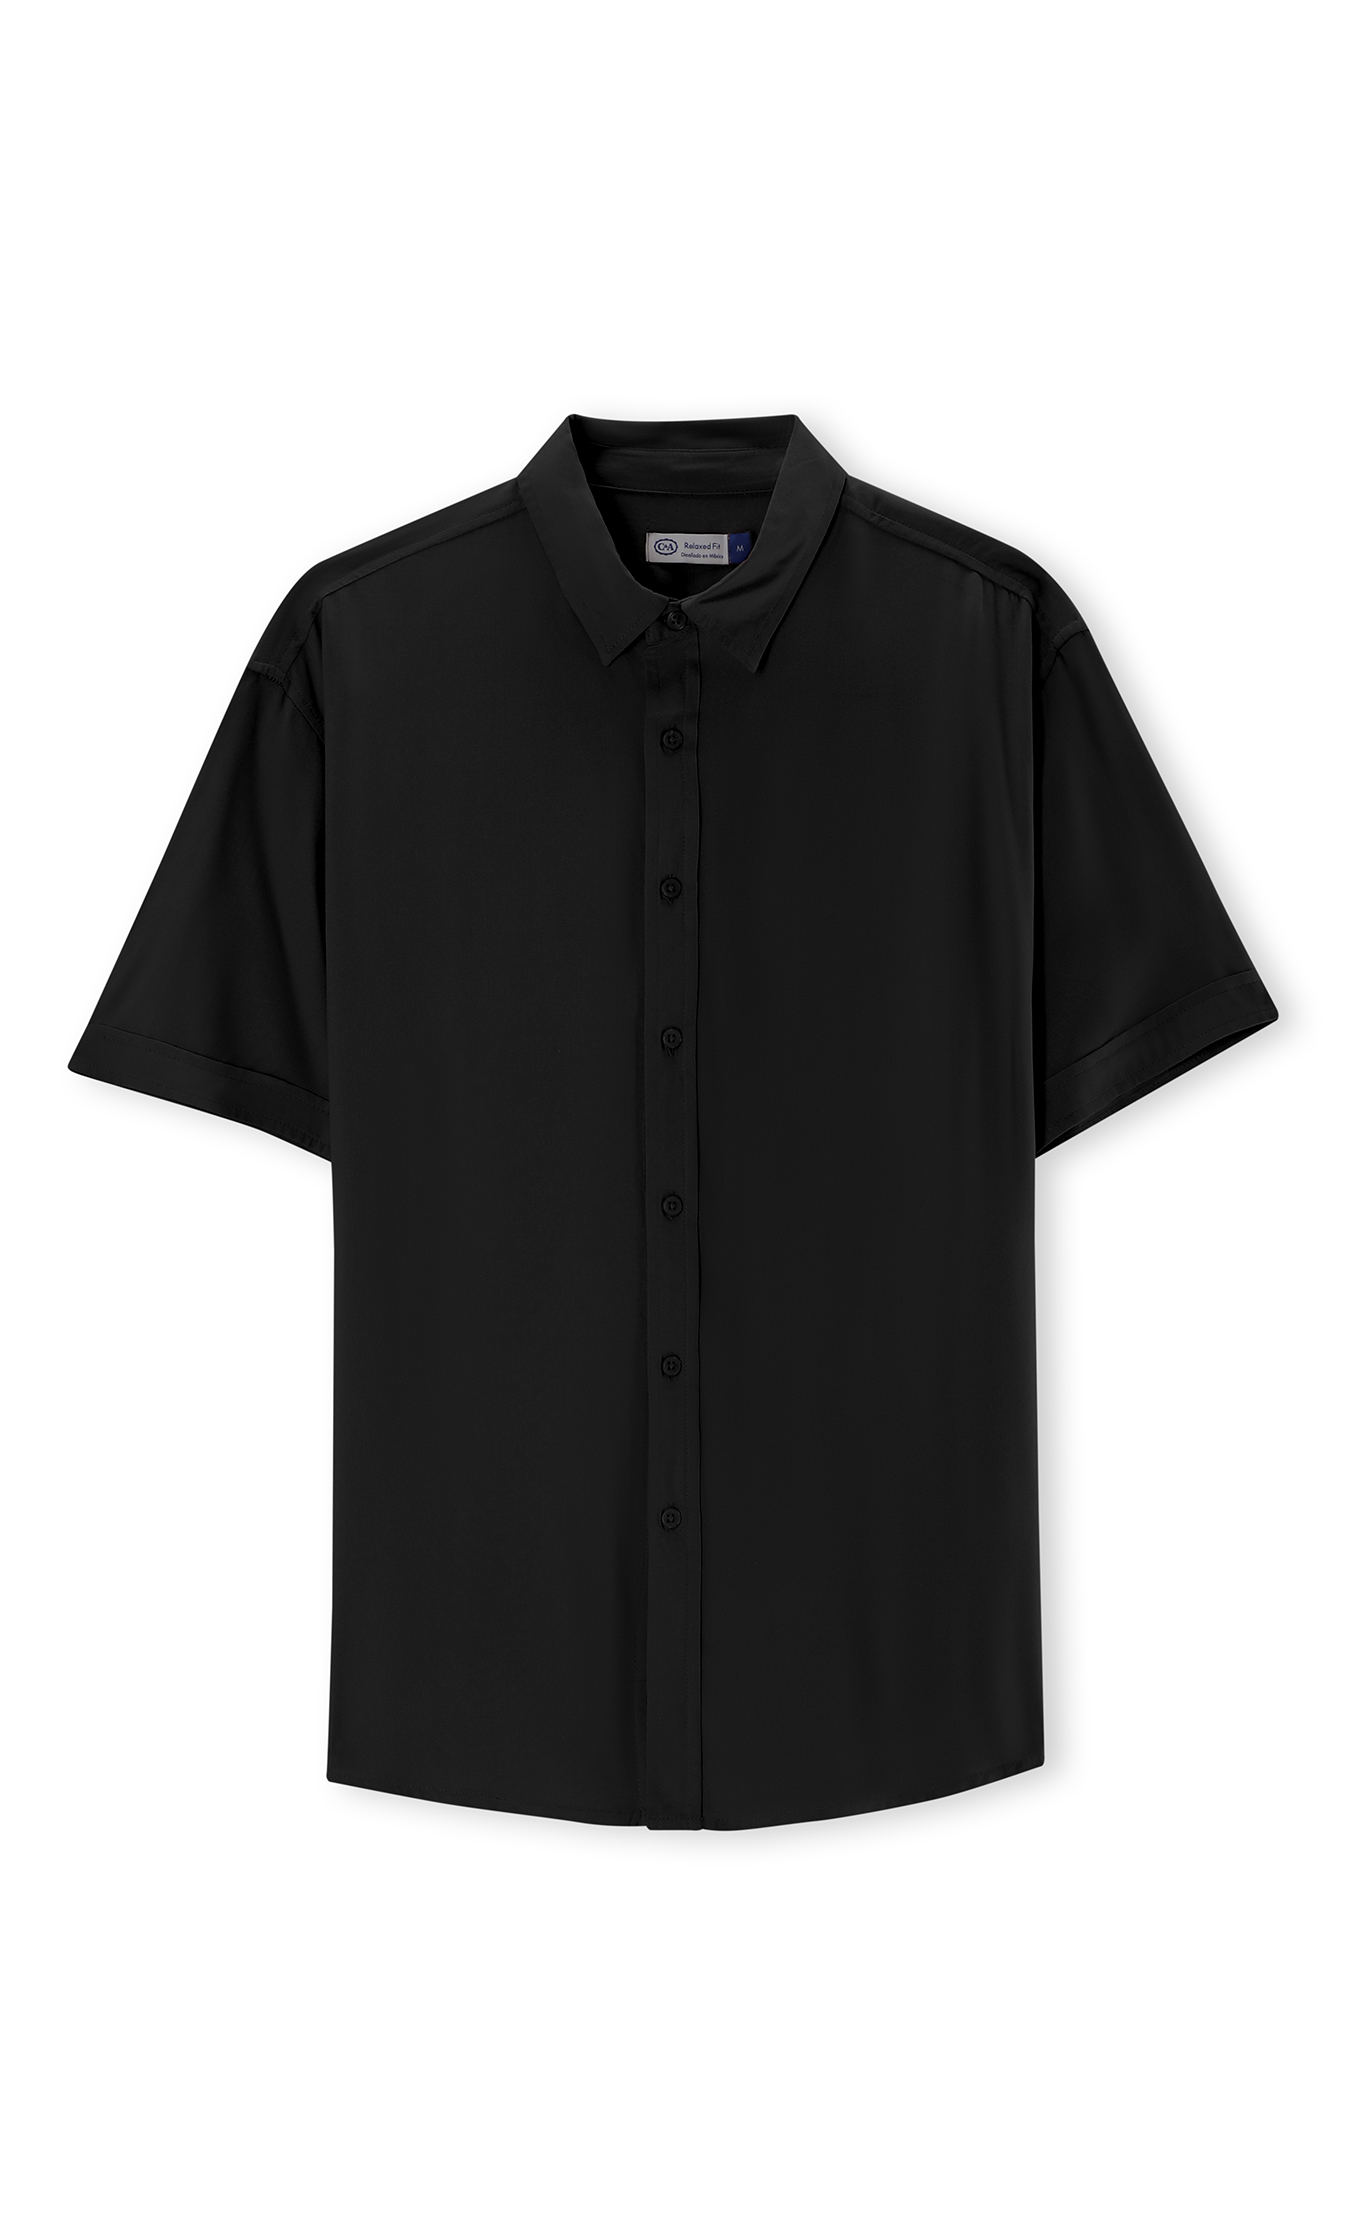  n/a Camiseta negra de manga corta para hombre Camisa de fondo  de algodón de media manga suelta de verano para hombre (Color negro, Talla  : XXL Code) : Ropa, Zapatos y